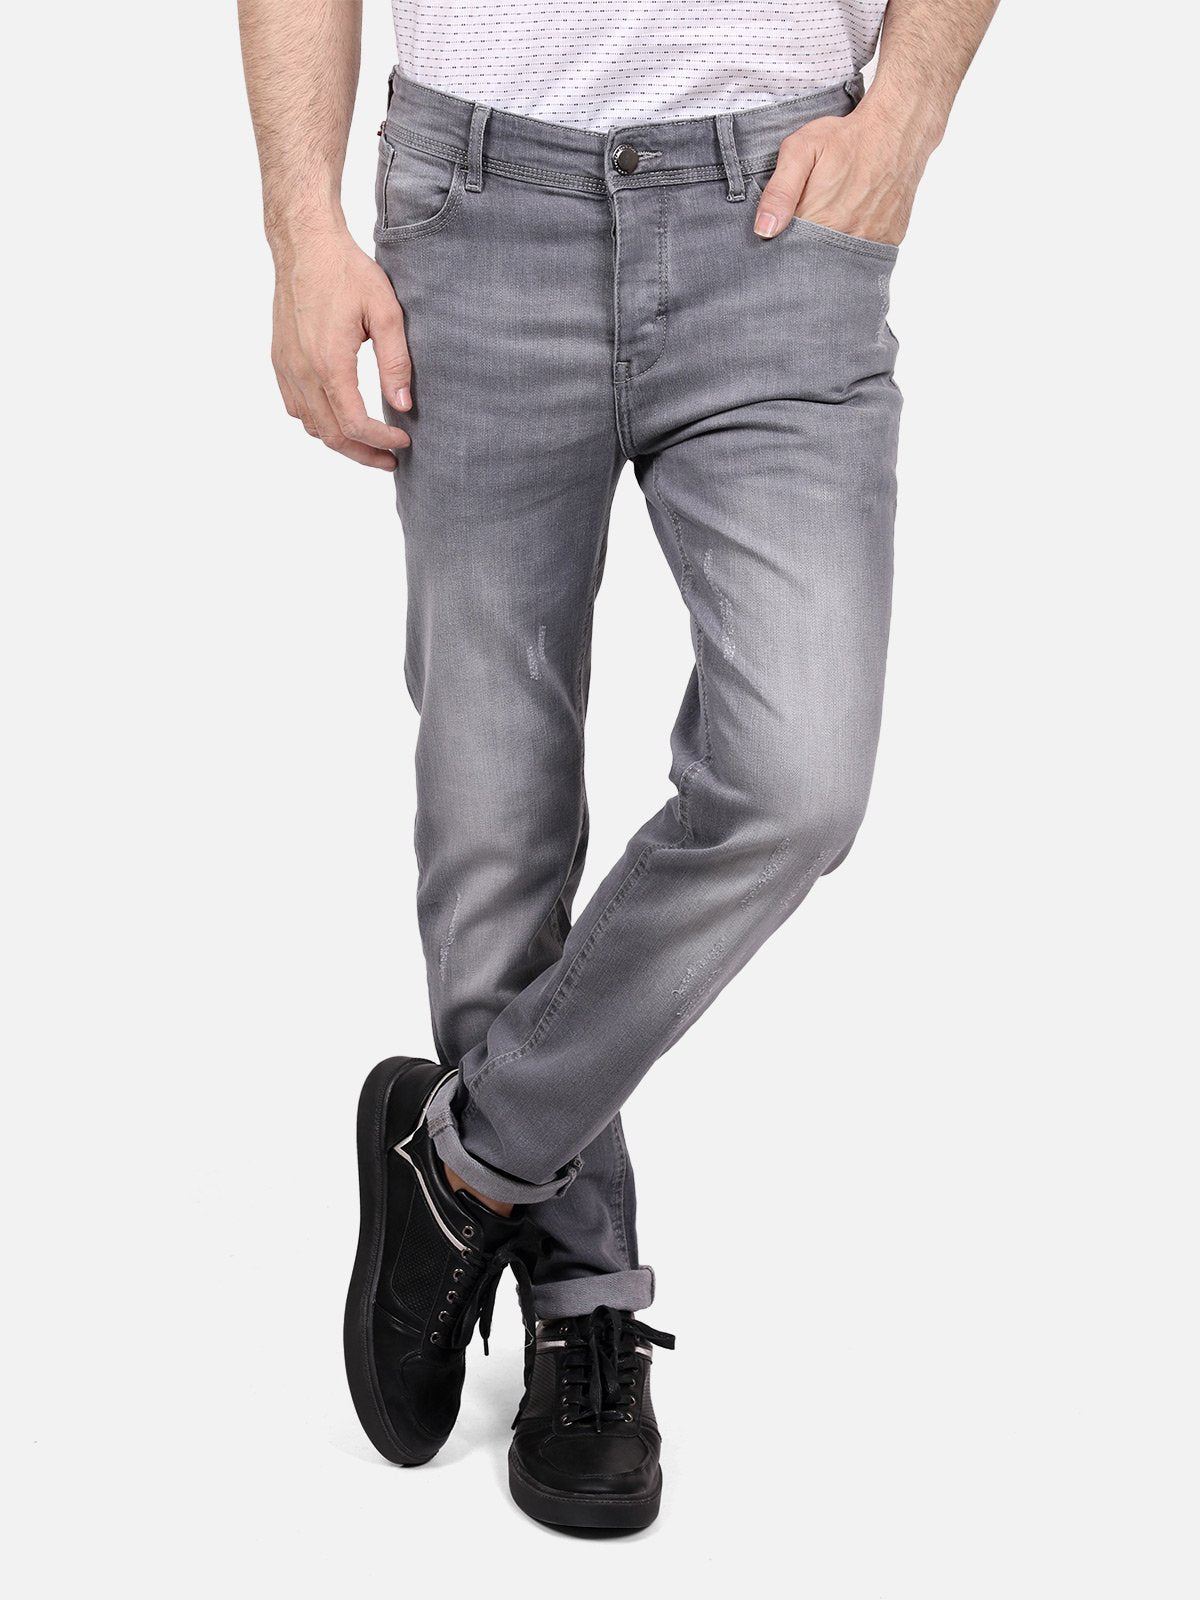 Men's Grey Denim Jeans - FMBP18-009